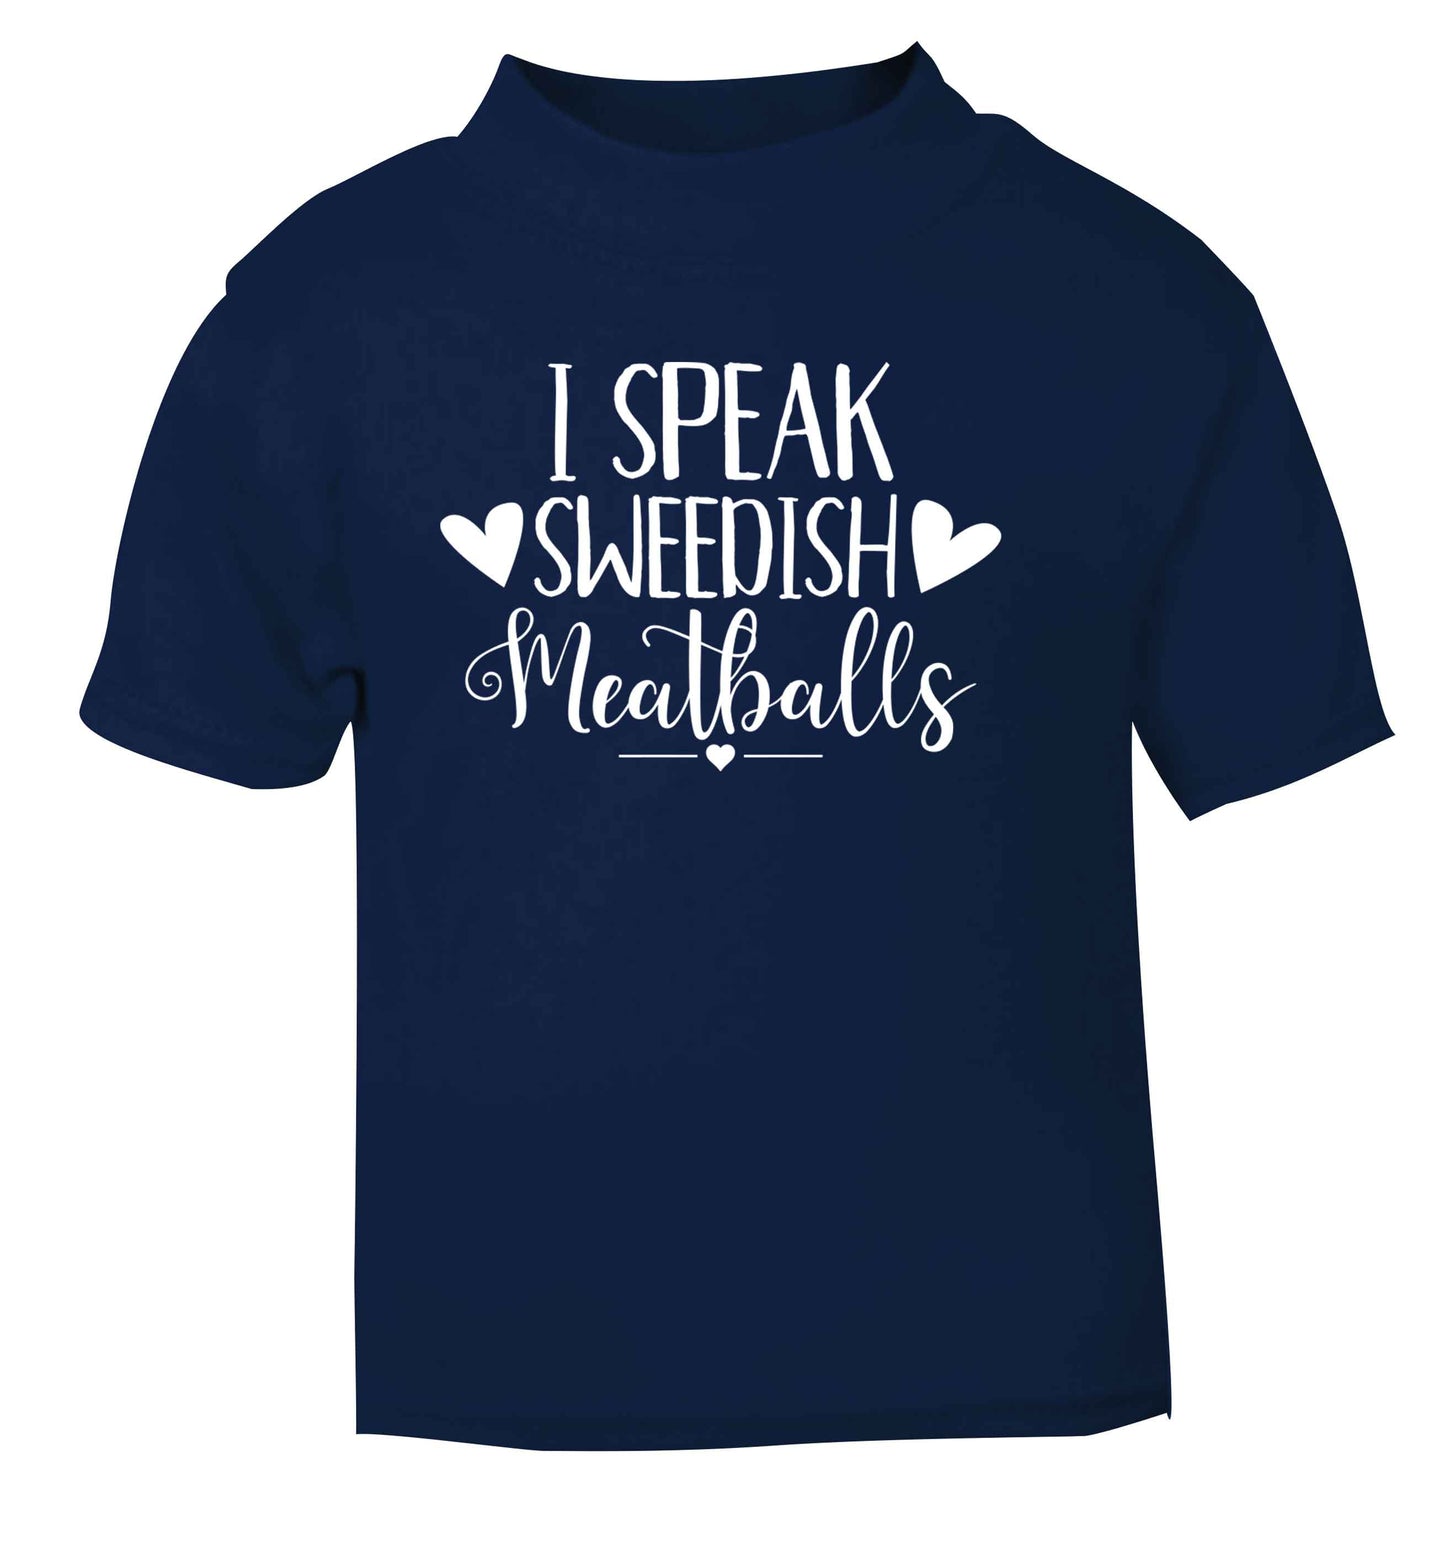 I speak sweedish...meatballs navy Baby Toddler Tshirt 2 Years